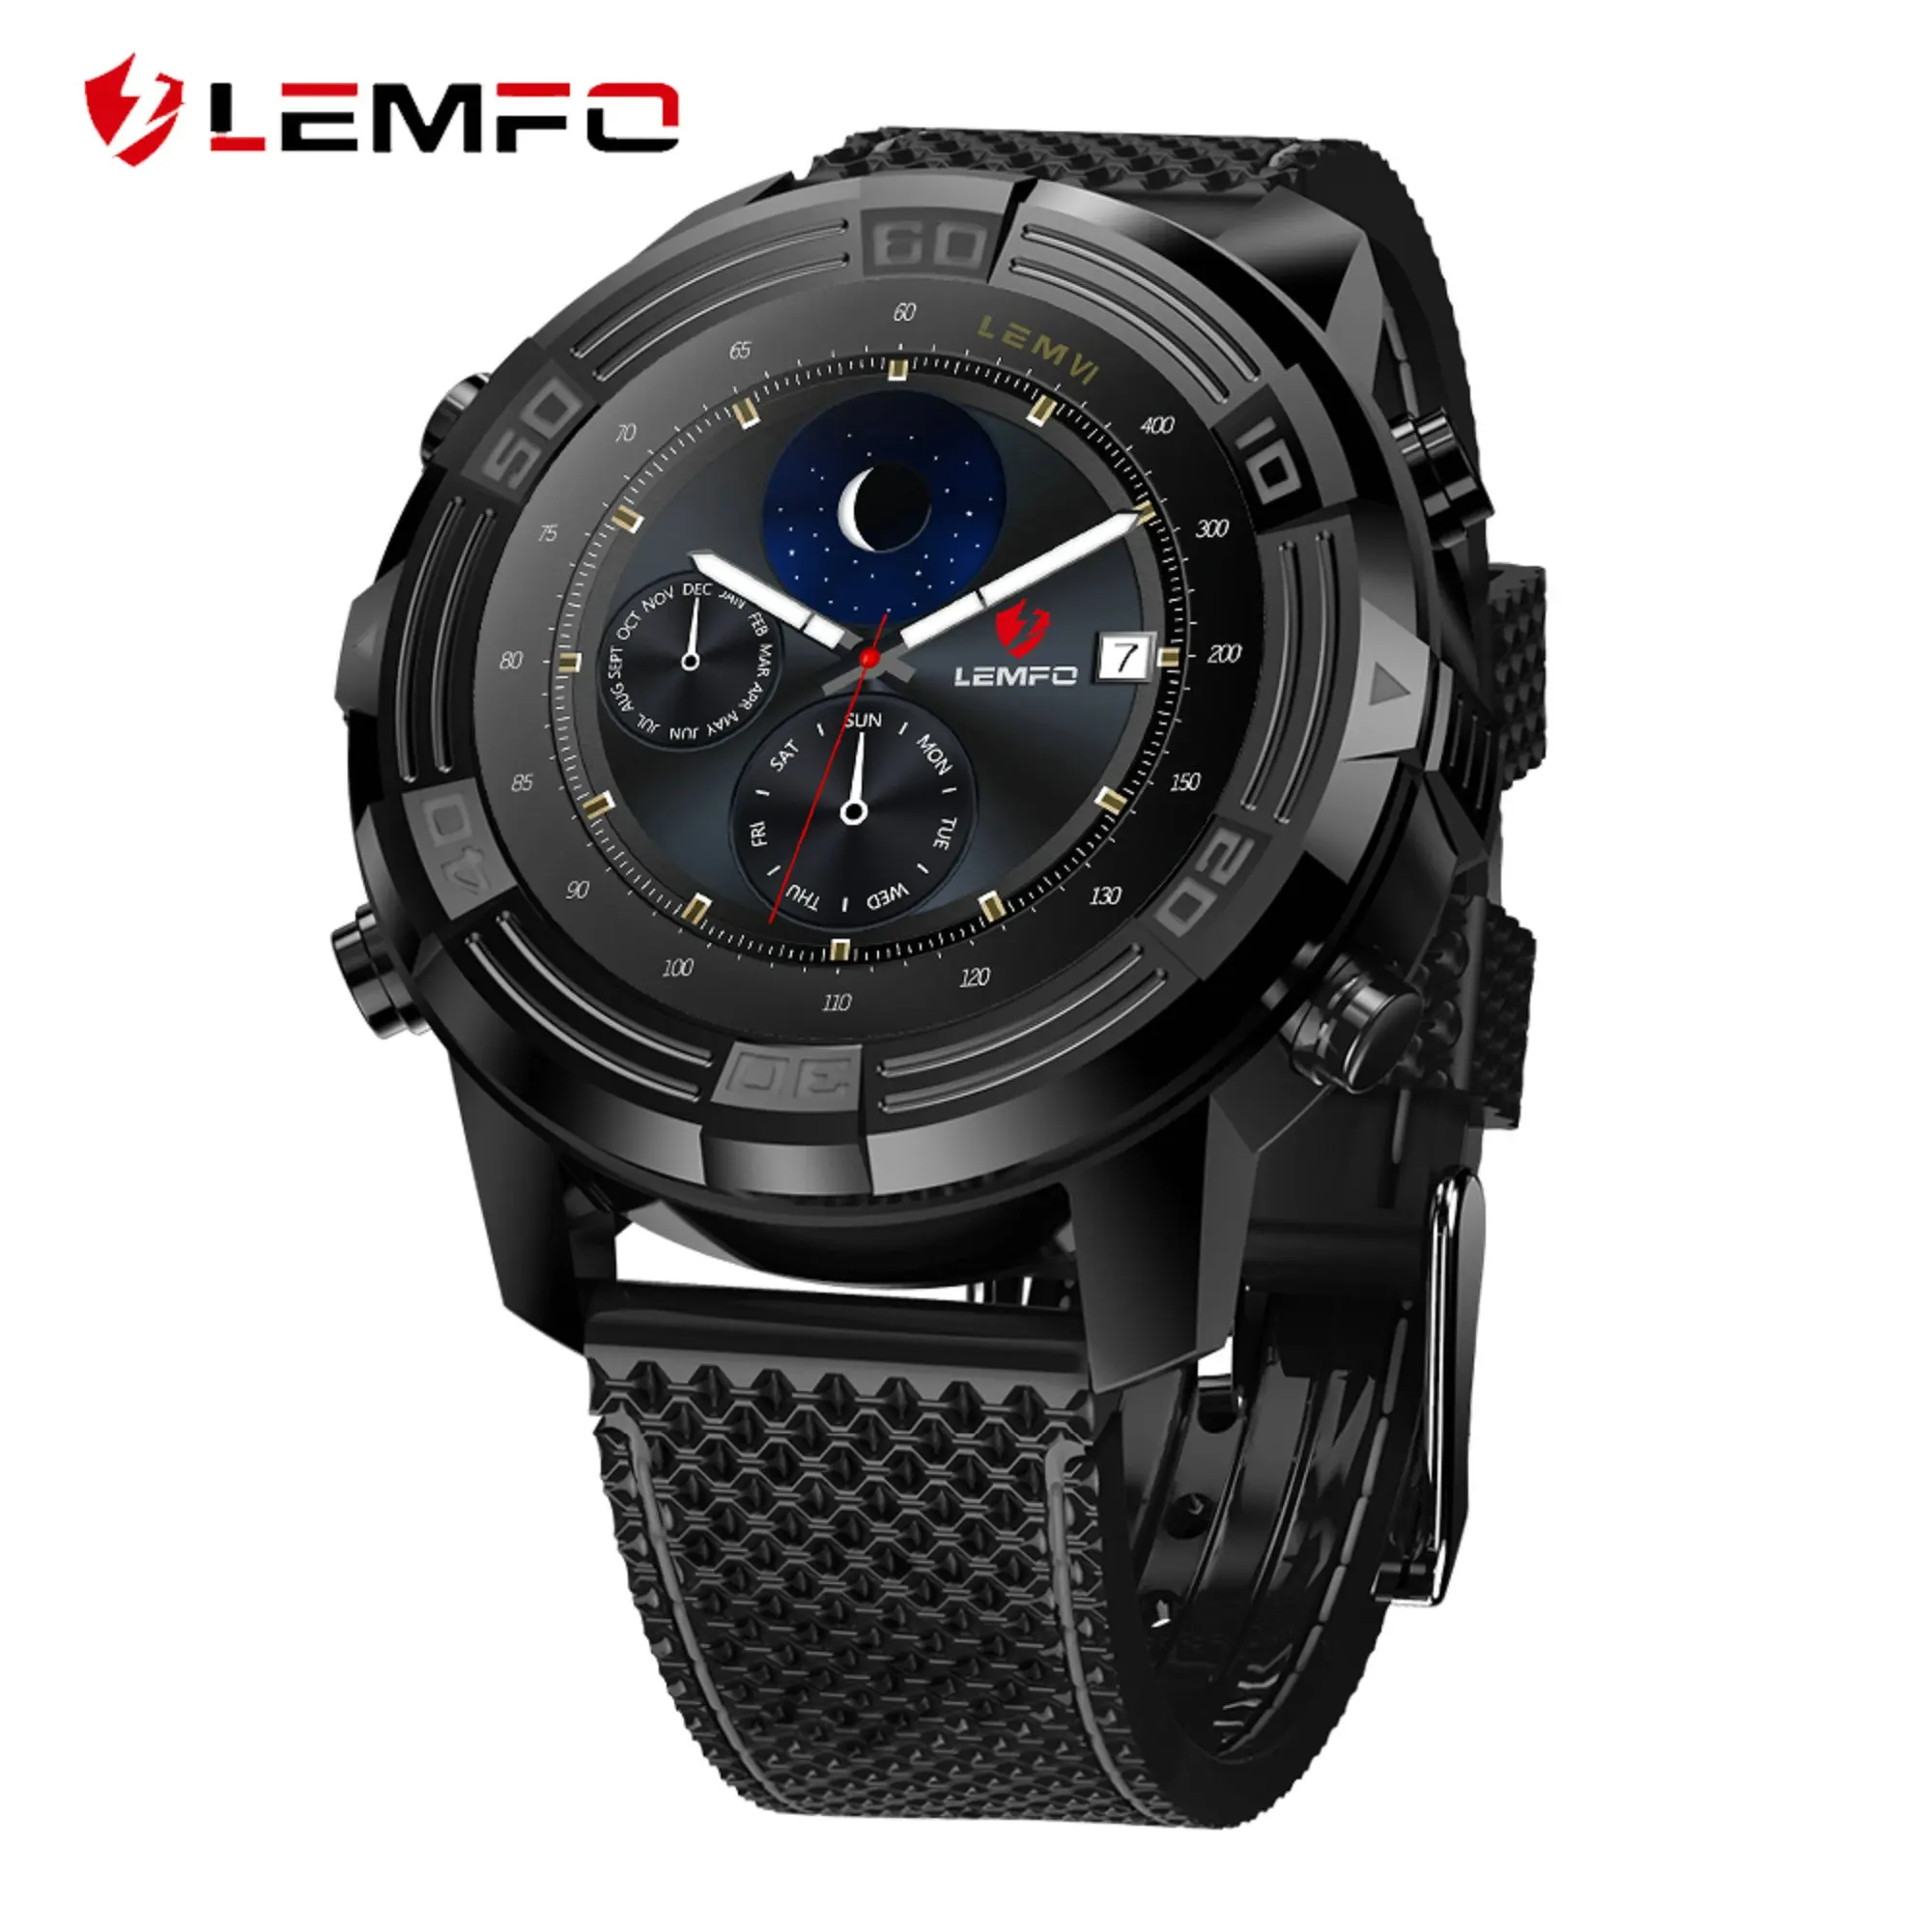 LEMFO LEM6 3G Smartwatch Android 5.1 